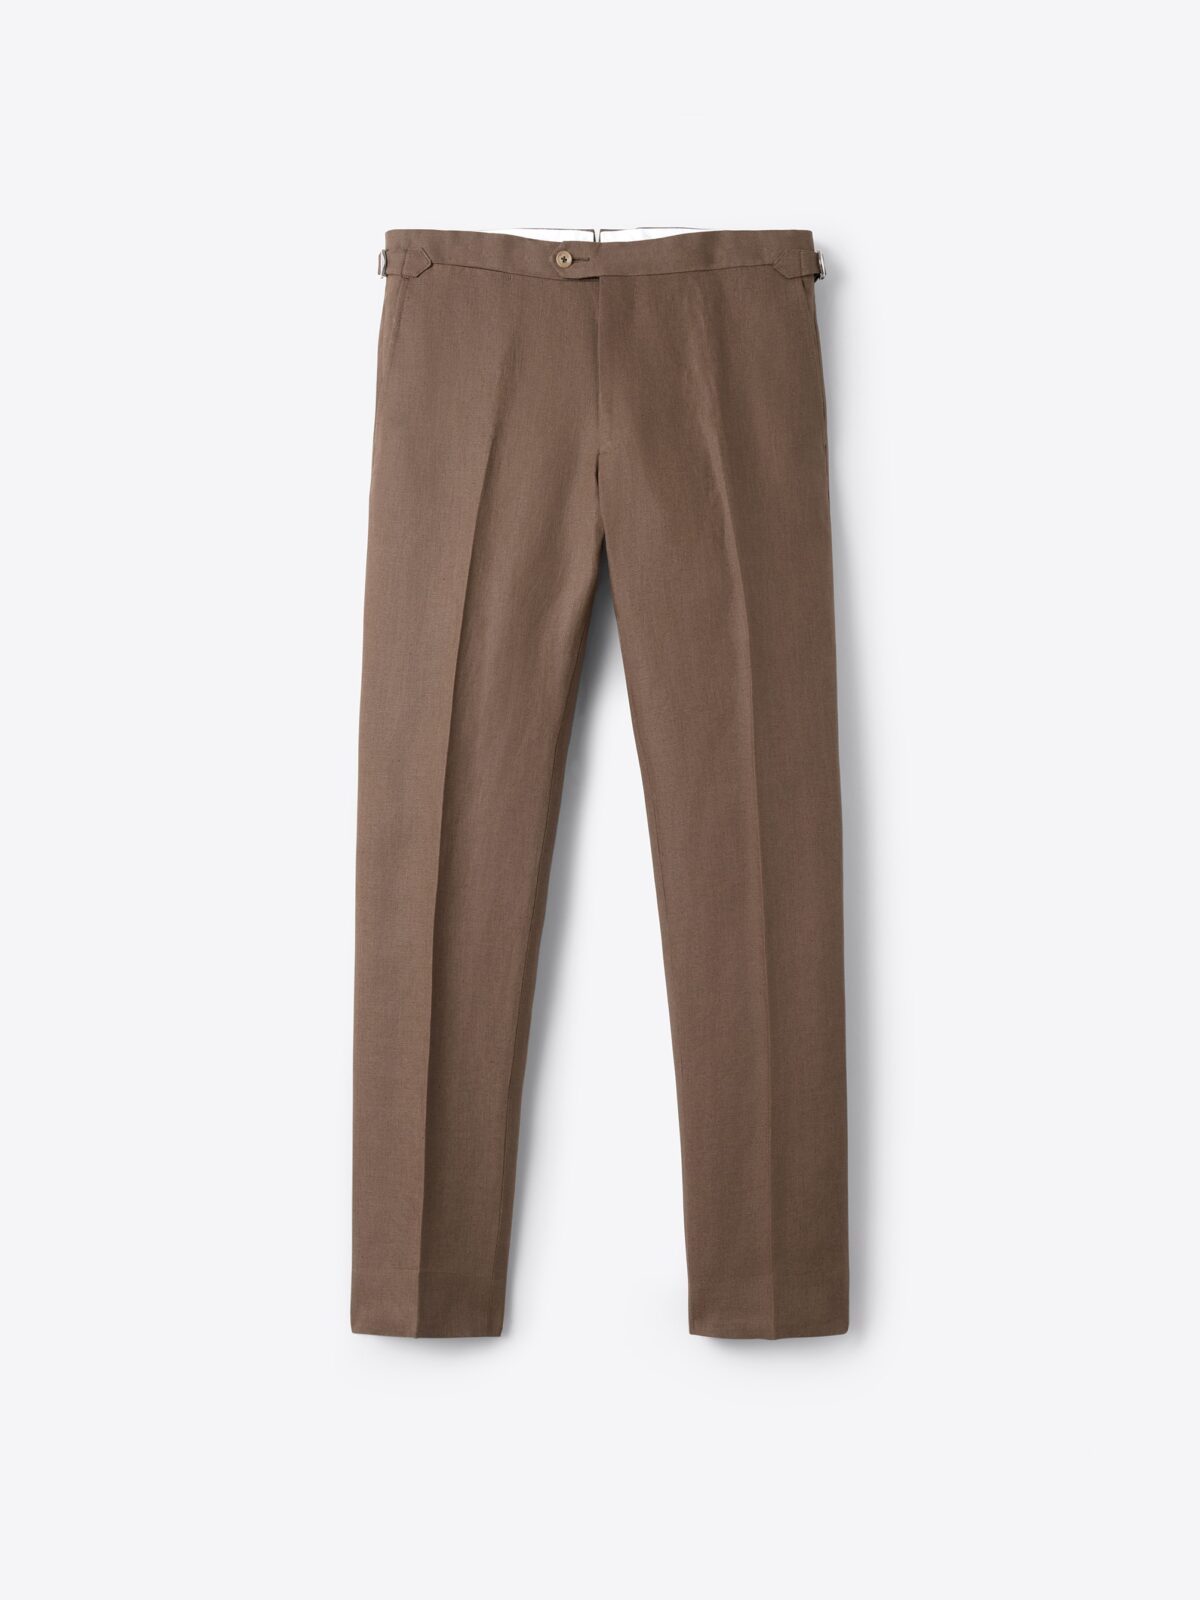 Mens Linen Cargo Pants With Side Pockets, Summer Pants, Latte